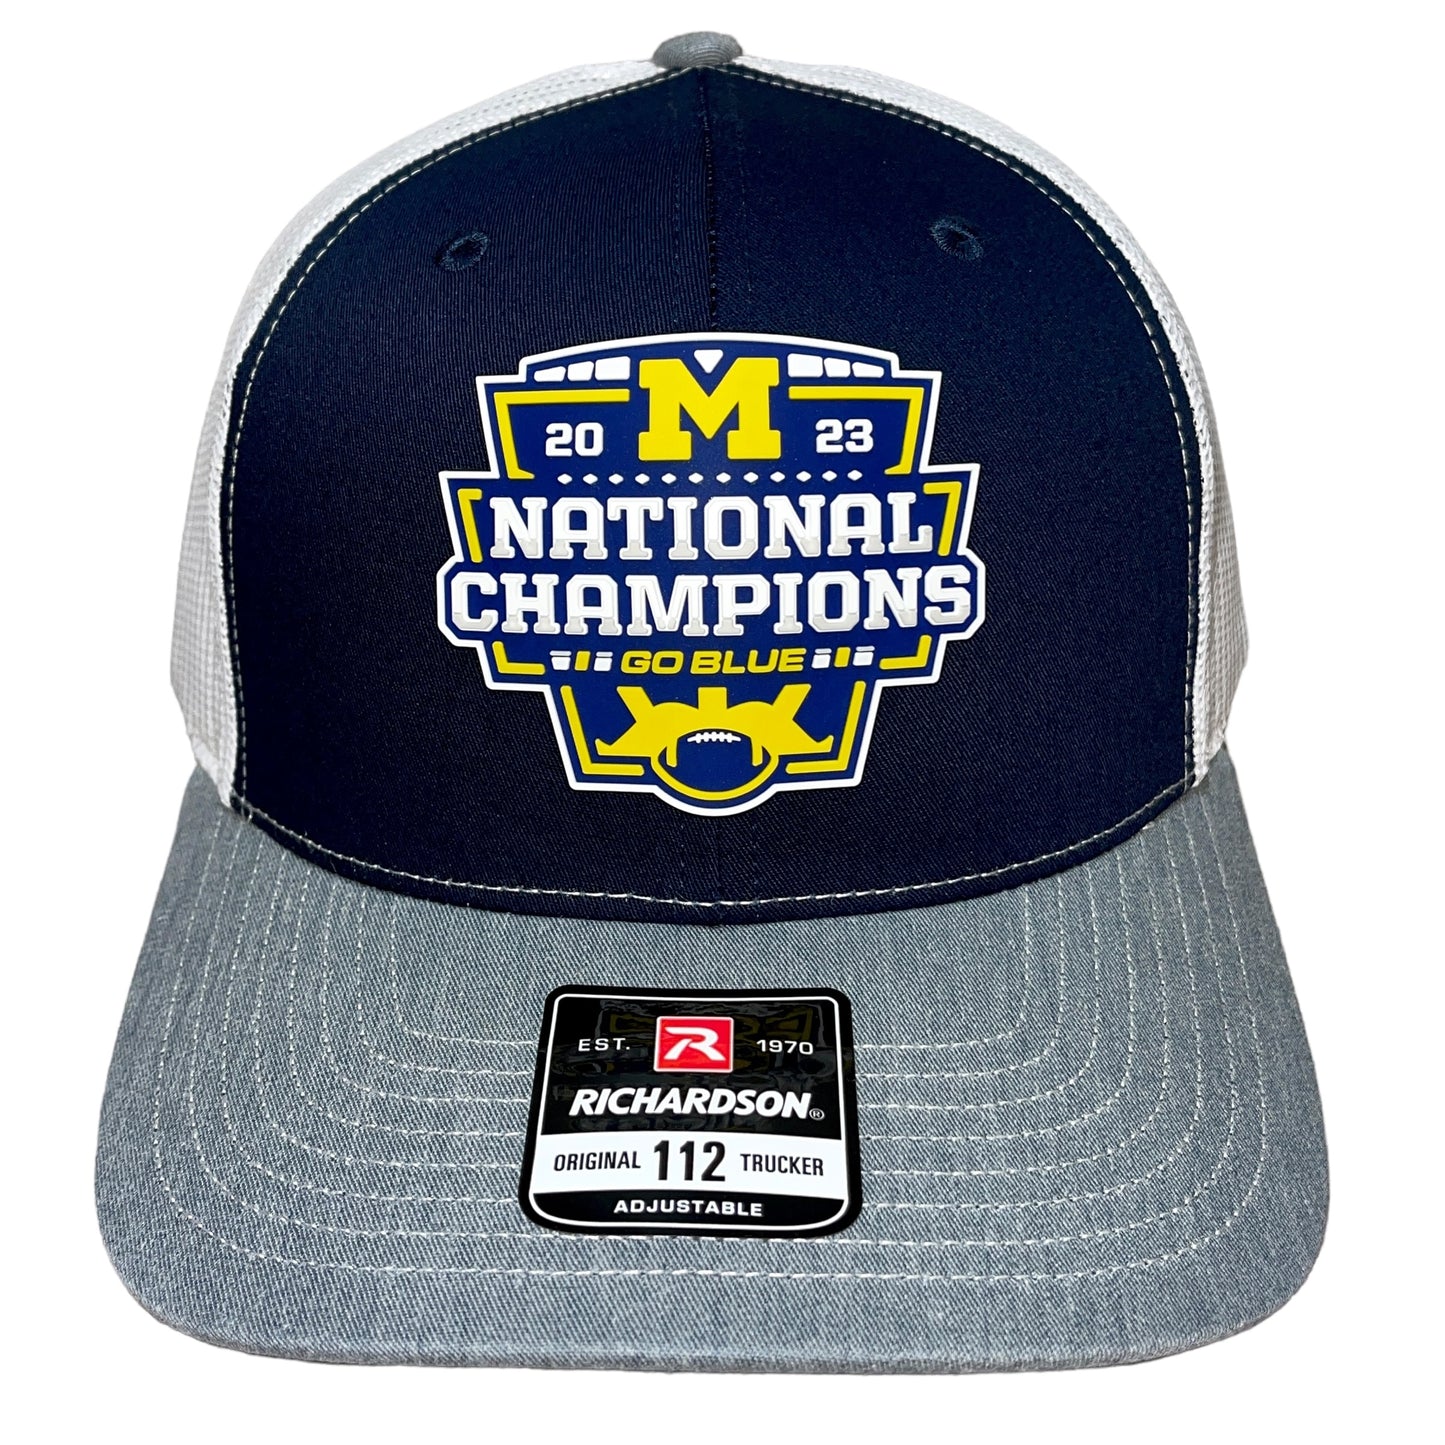 Michigan College Football Playoff 2023 National Champions 3D Snapback Trucker Hat- Navy/ White/ Grey - Ten Gallon Hat Co.